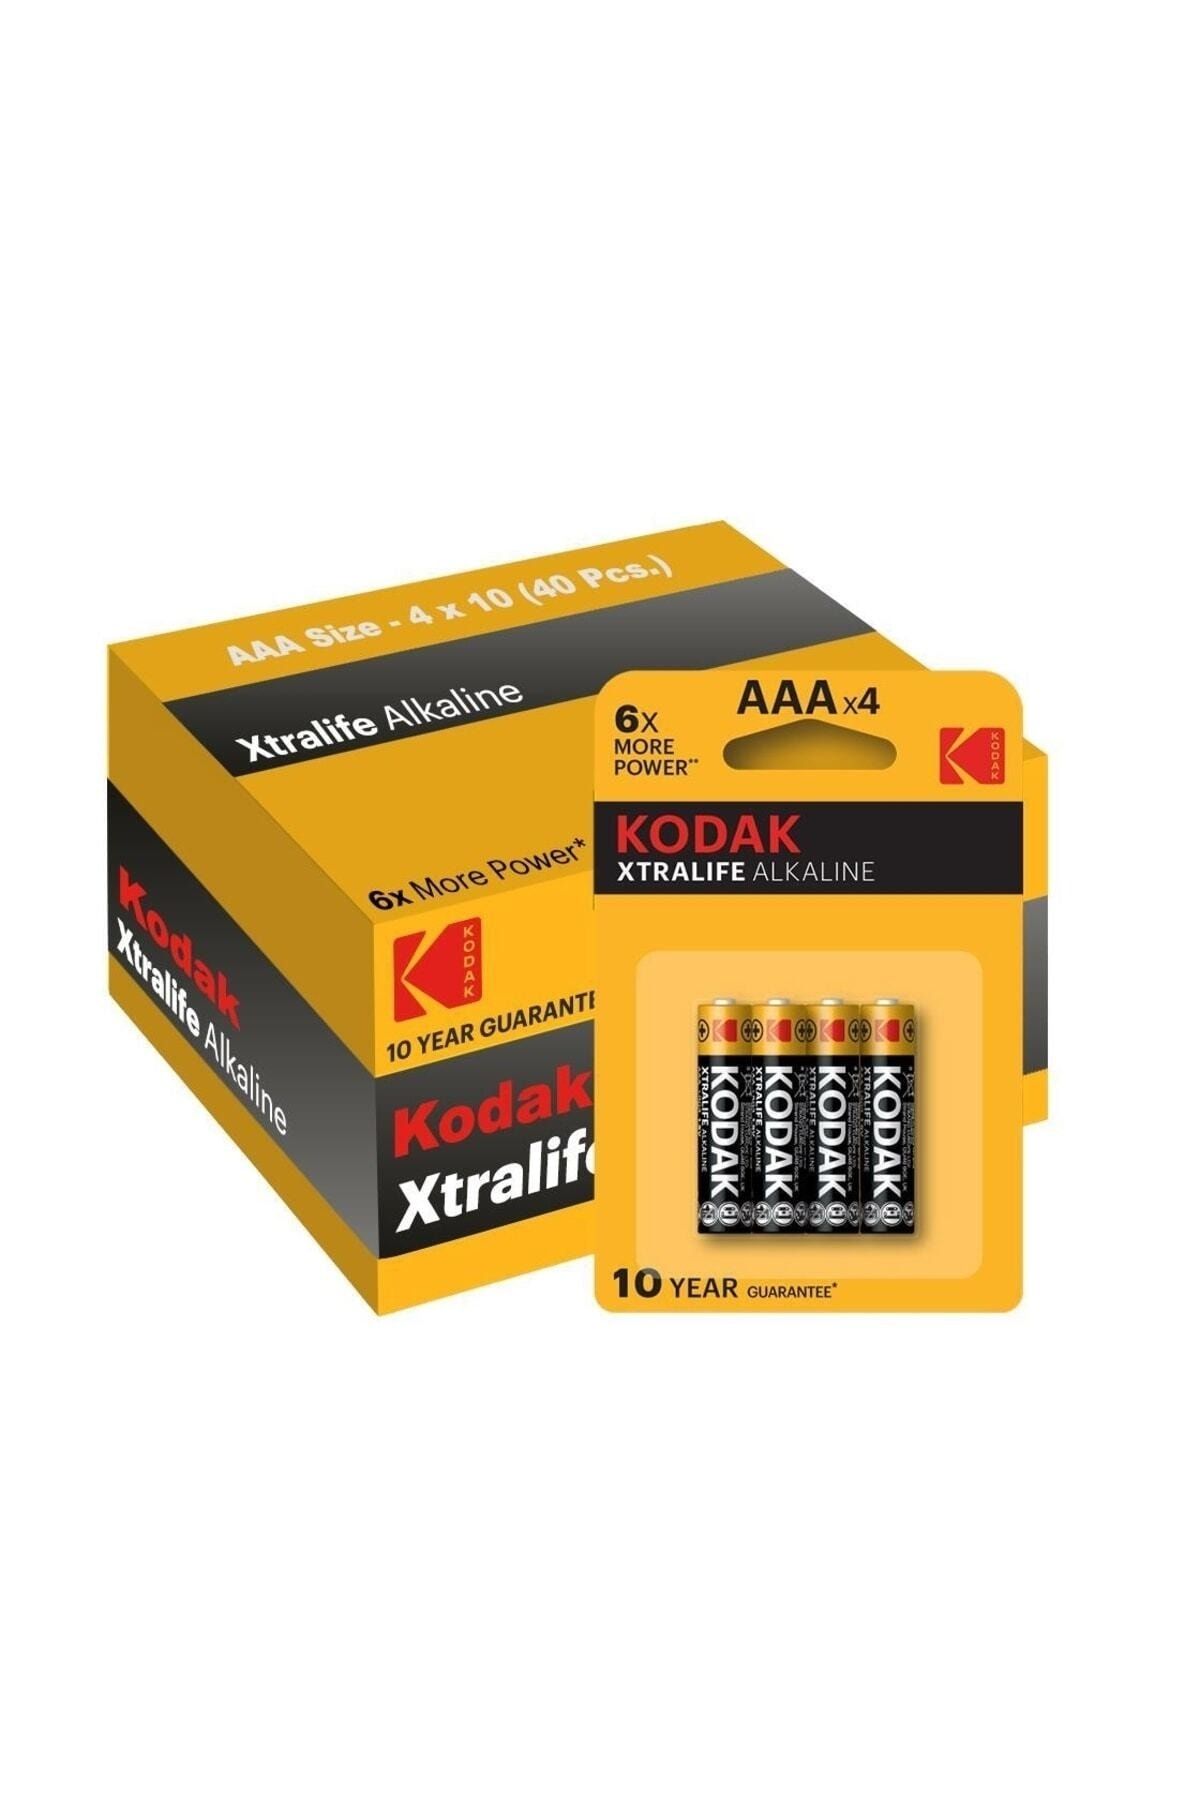 Kodak Xtralife Alkaline Incce Kalem Pil Aaa 40 Adet